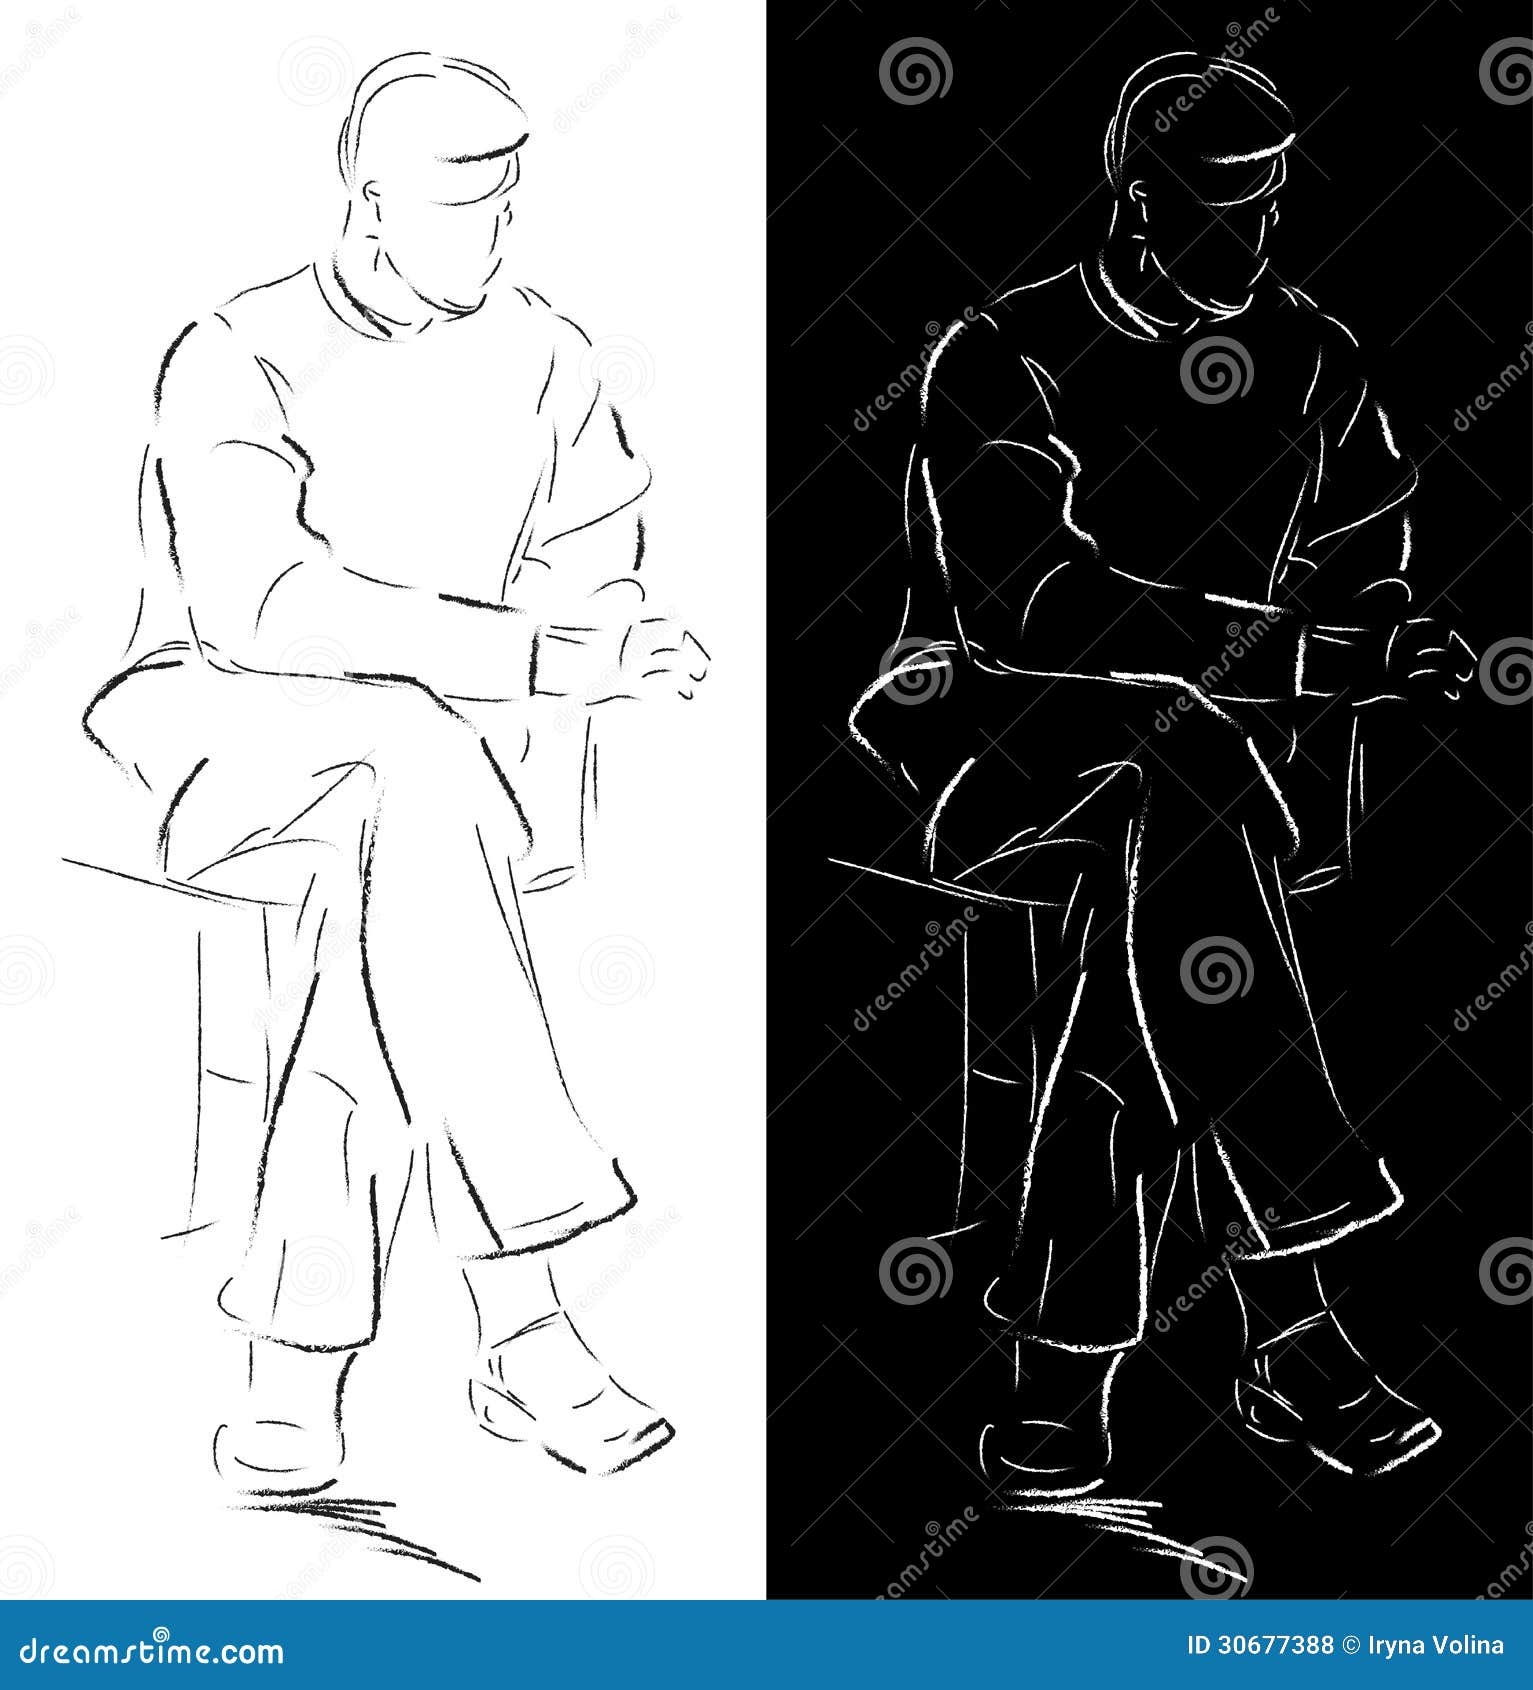 Sitting man stock vector. Illustration of human, style - 30677388